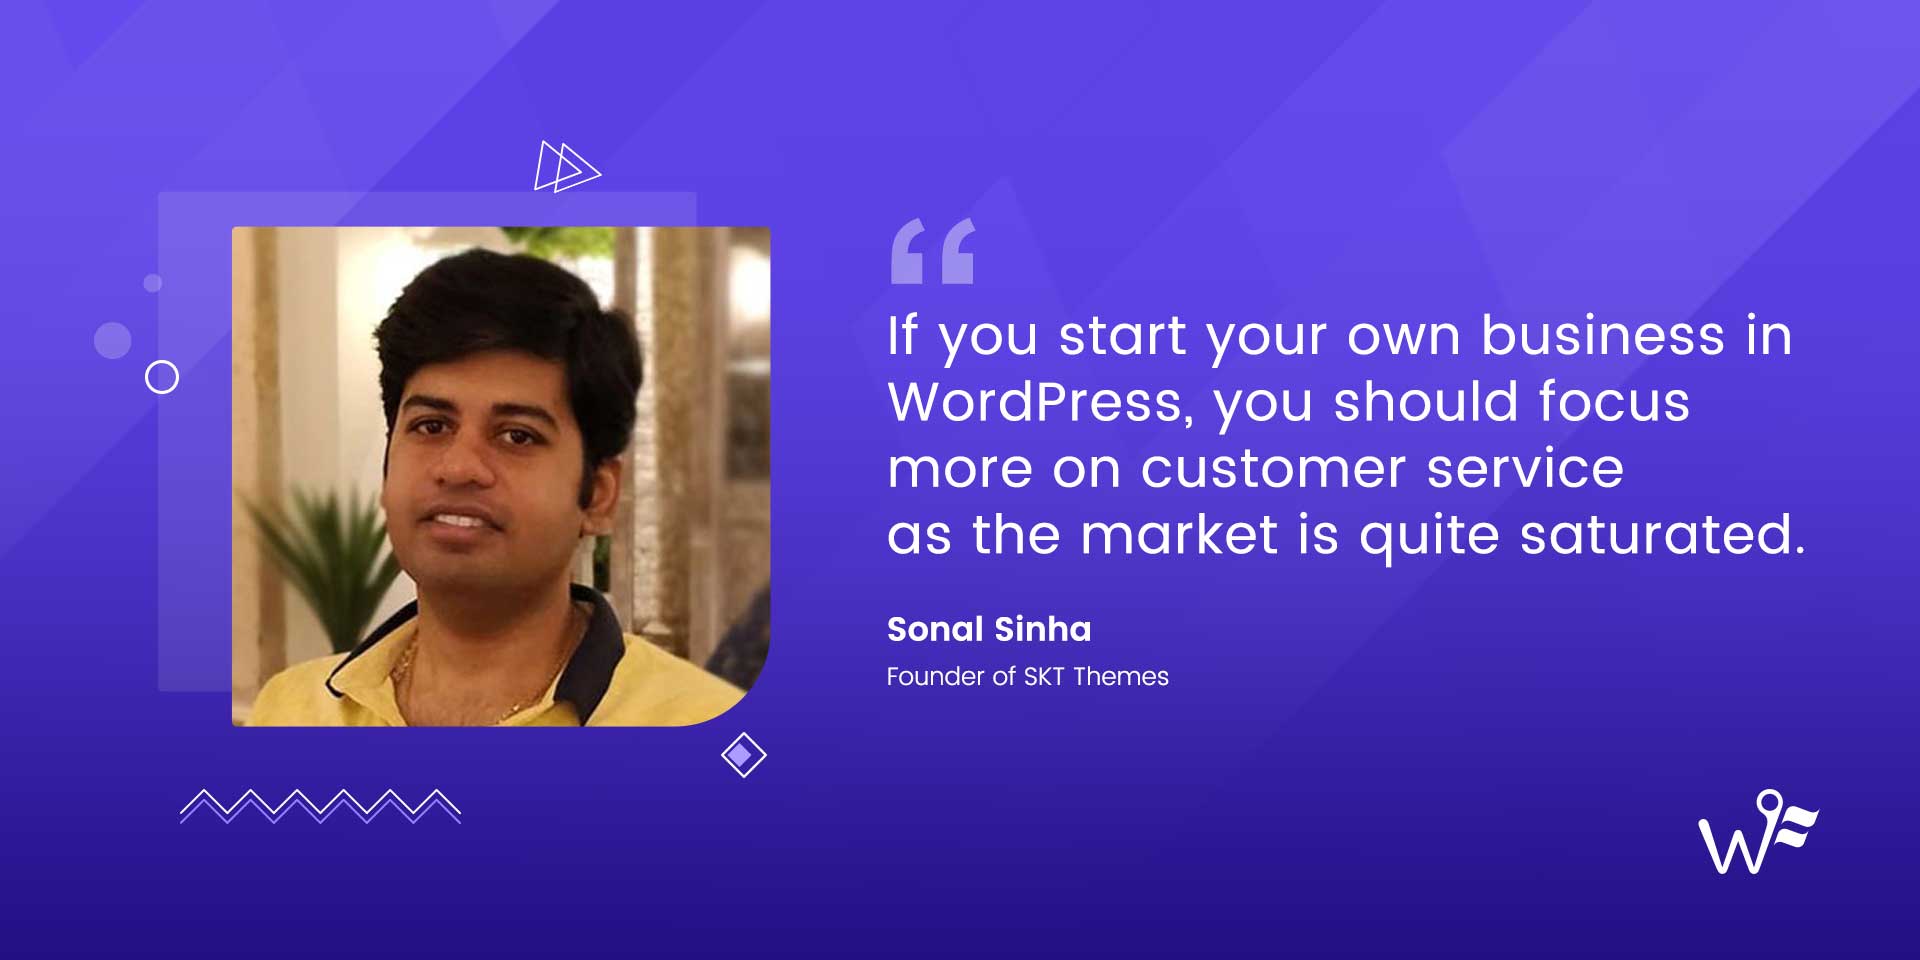 Sonal Sinha of SKT Themes Sharing His Success Story